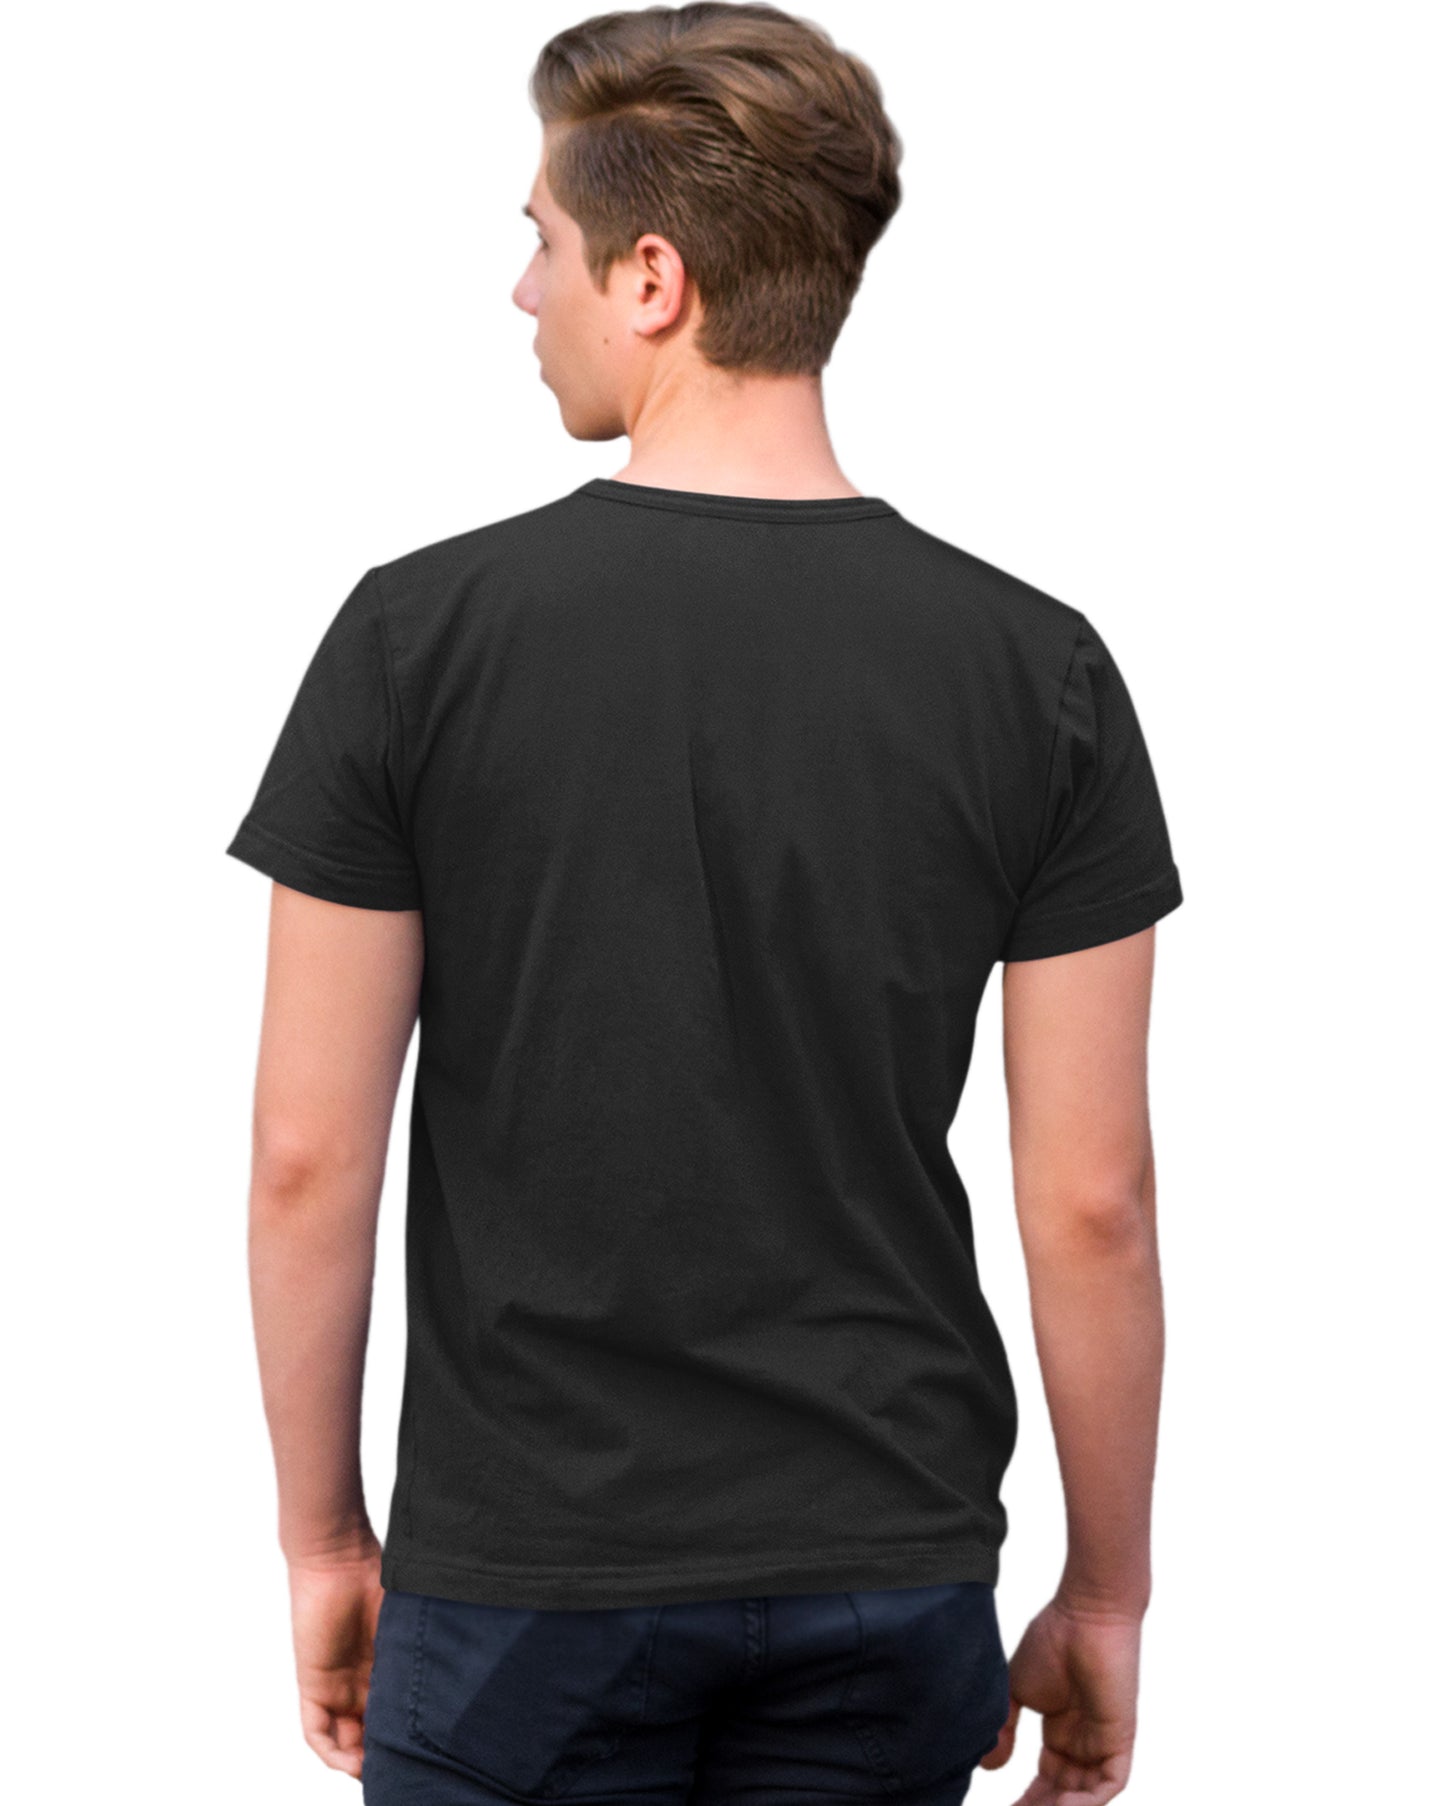 Rotten Regular Fit T-shirt for Men